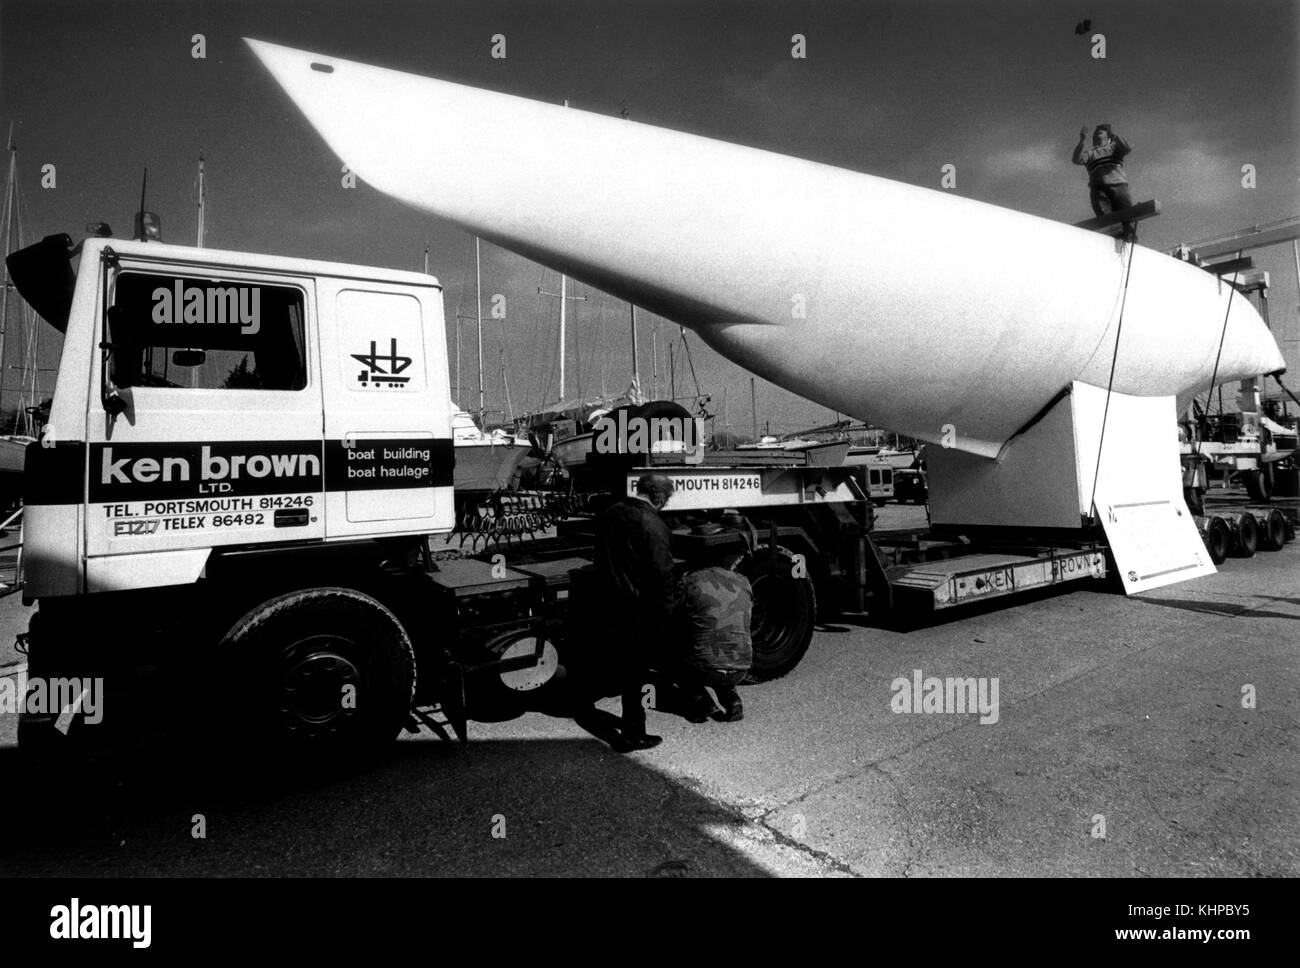 AJAXNETPHOTO. 1986. SOUTHAMPTON, ENGLAND. DAVID HOLLOM ENTWARF DEN WEISSEN HIPPO-CRUSADER K-25, 1986-7 CHALLENGER NACH DEM MODELL DER YACHT. FOTO: JONATHAN EASTLAND/AJAX. REF:()YA HOLLOM 12M HIPPO Stockfoto